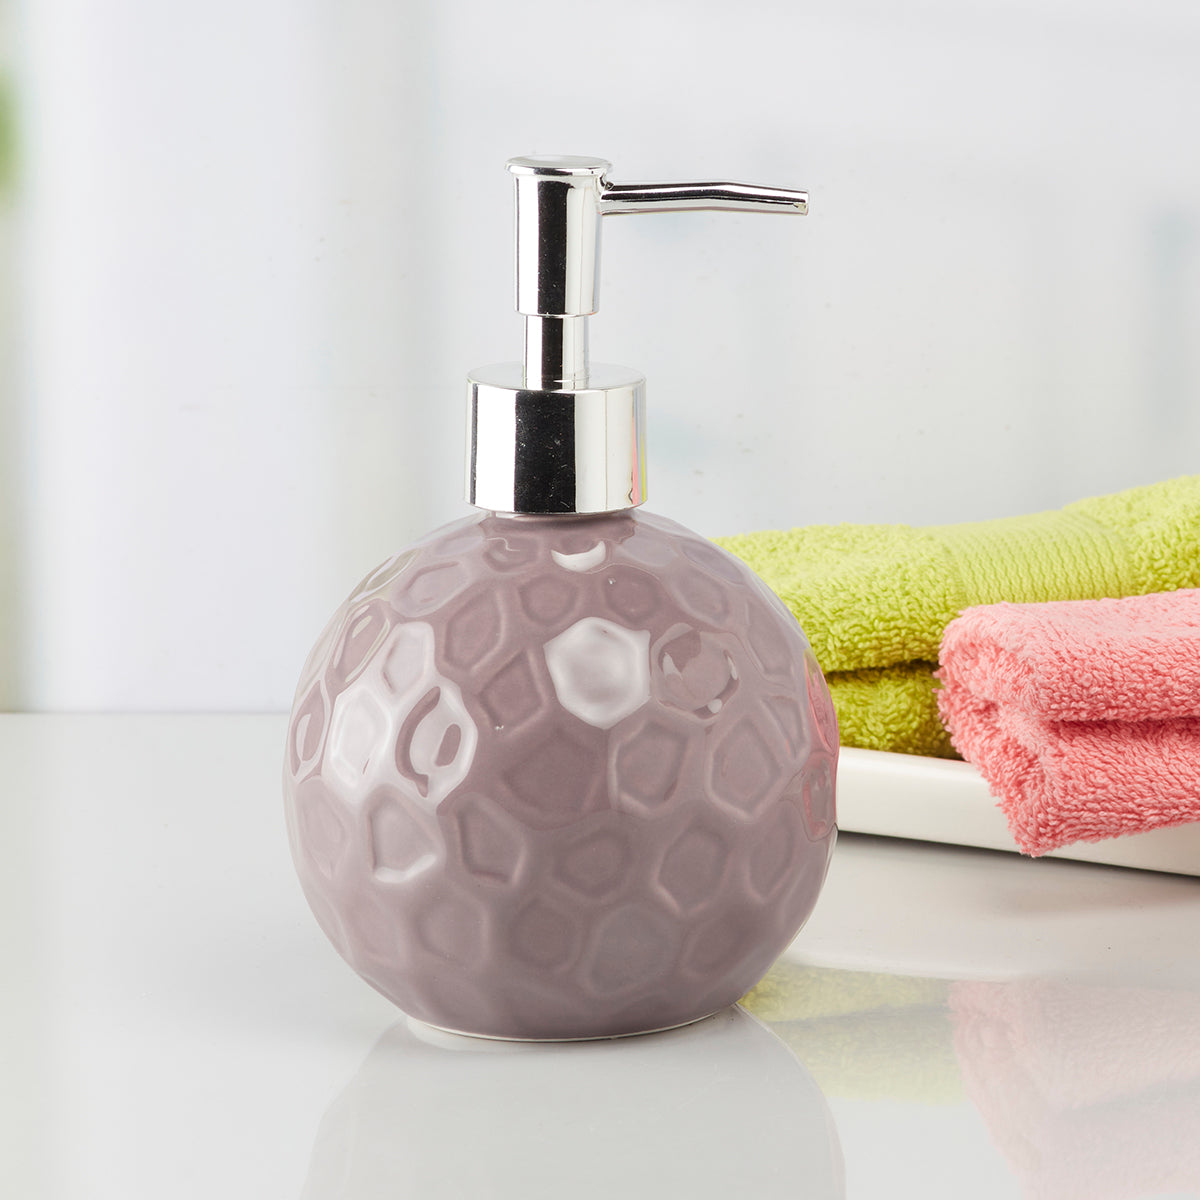 Ceramic Soap Dispenser handwash Pump for Bathroom, Set of 1, Wine (8010)